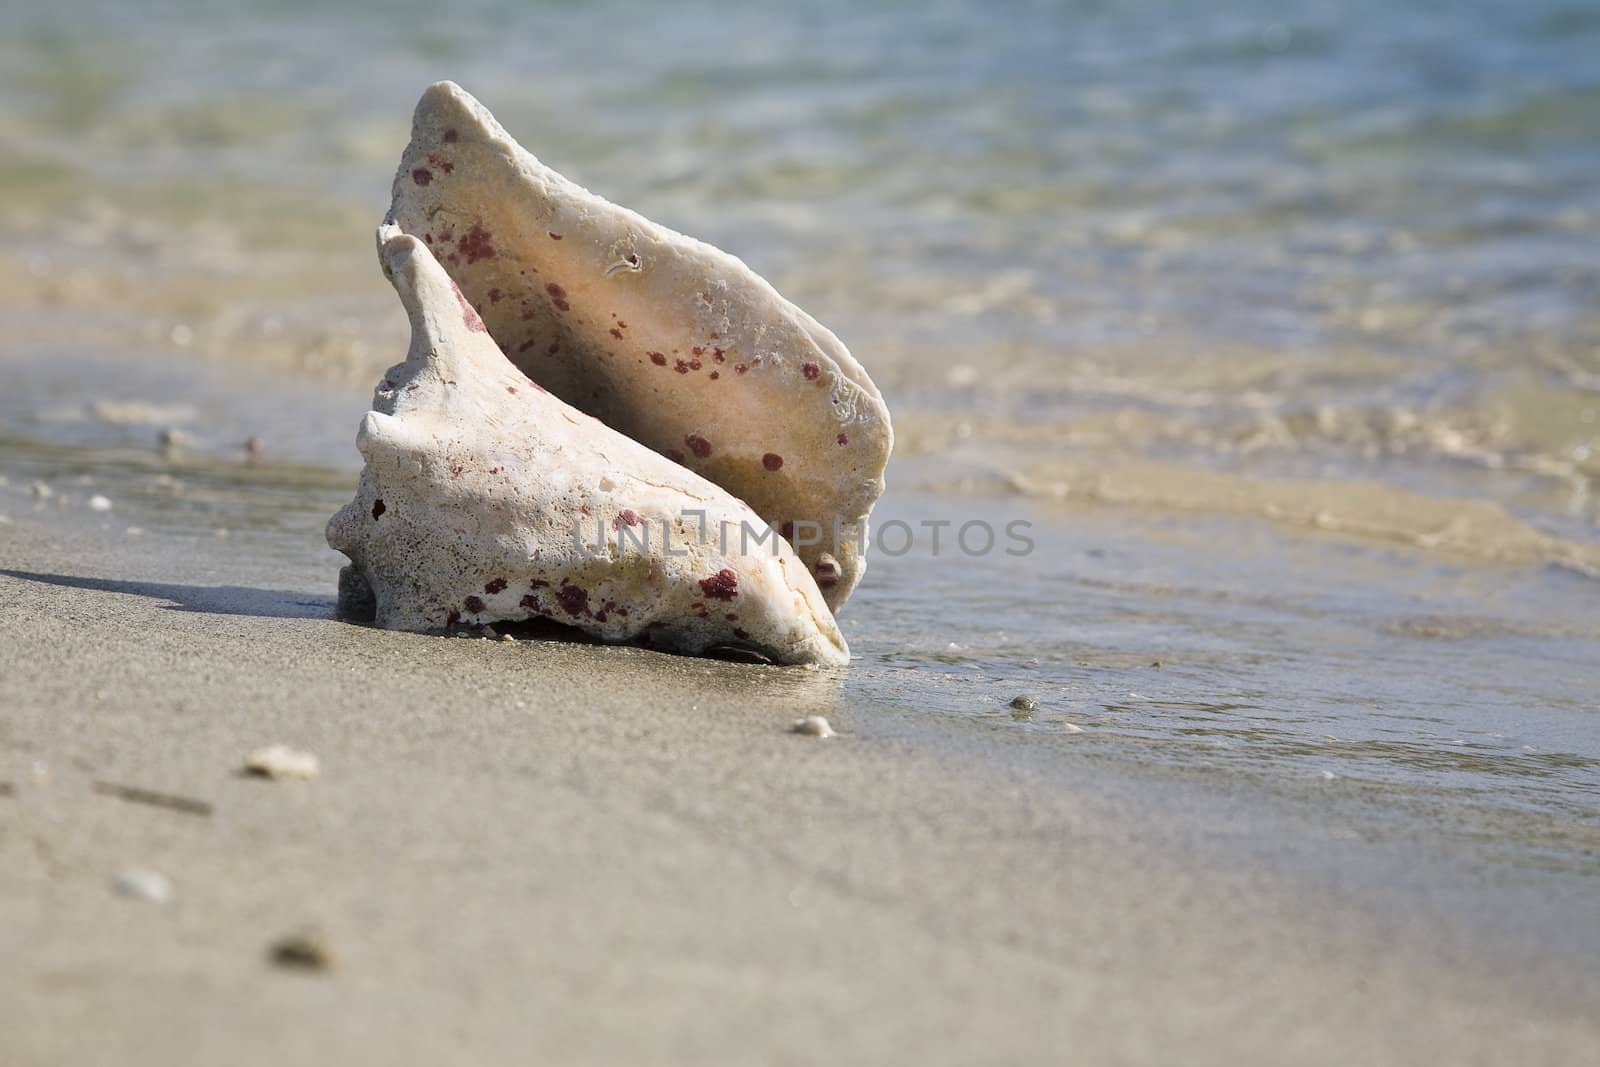 the shell on the beach